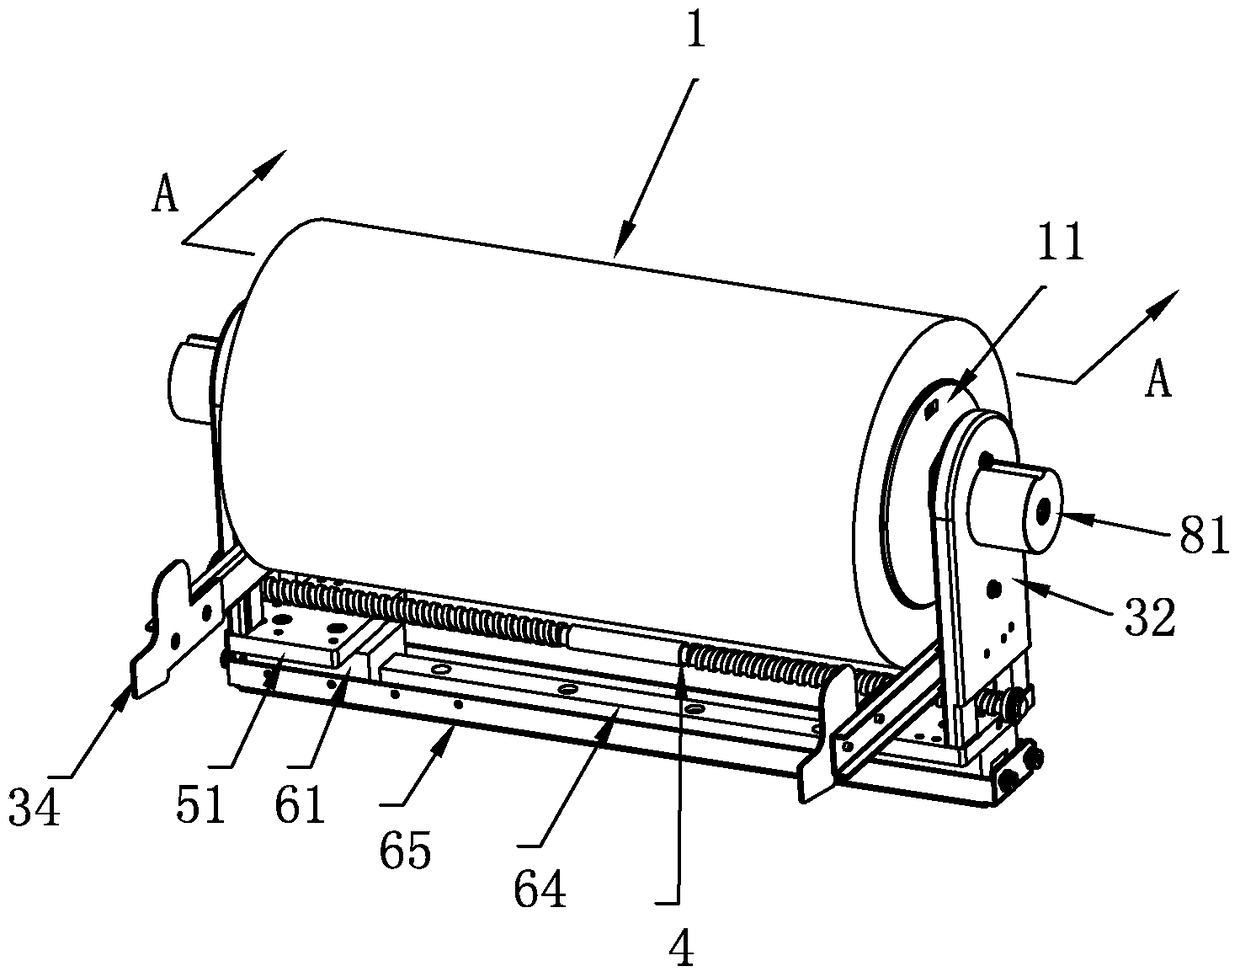 Printing supplies loading mechanism for printers